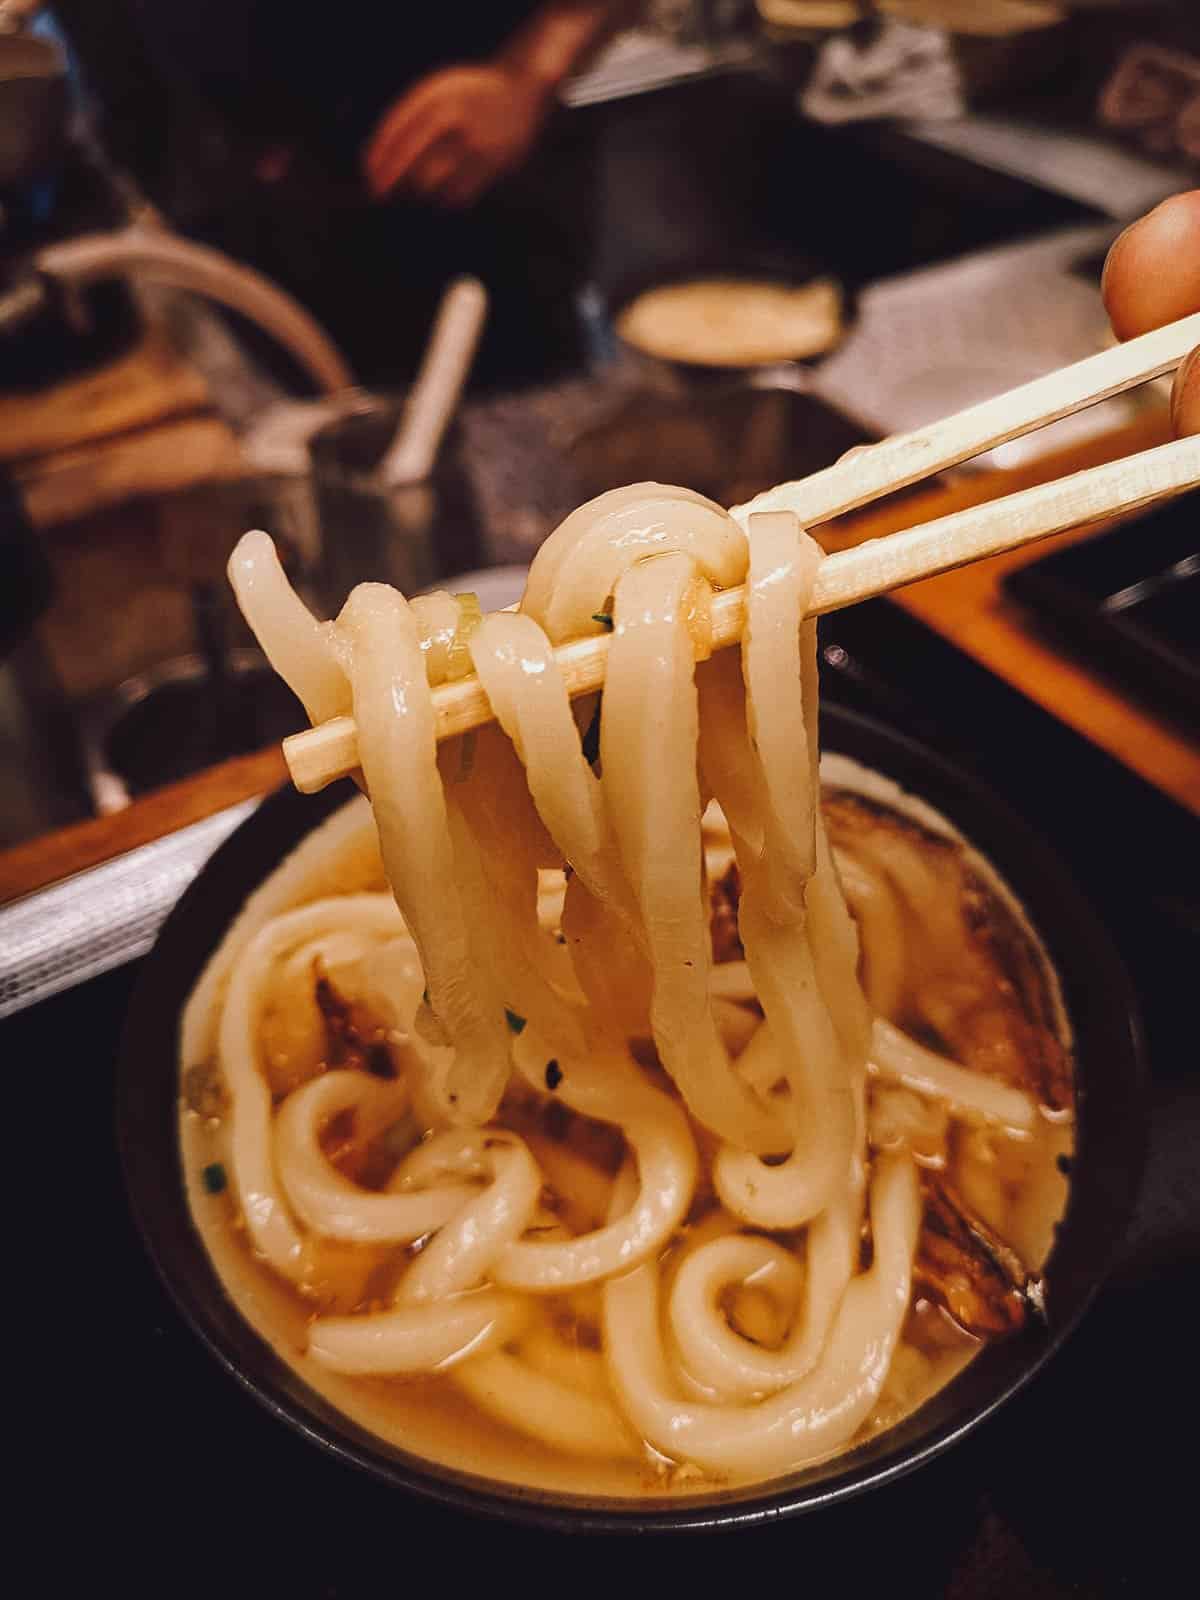 Showing off the udon noodles at Ibuki restaurant in Osaka